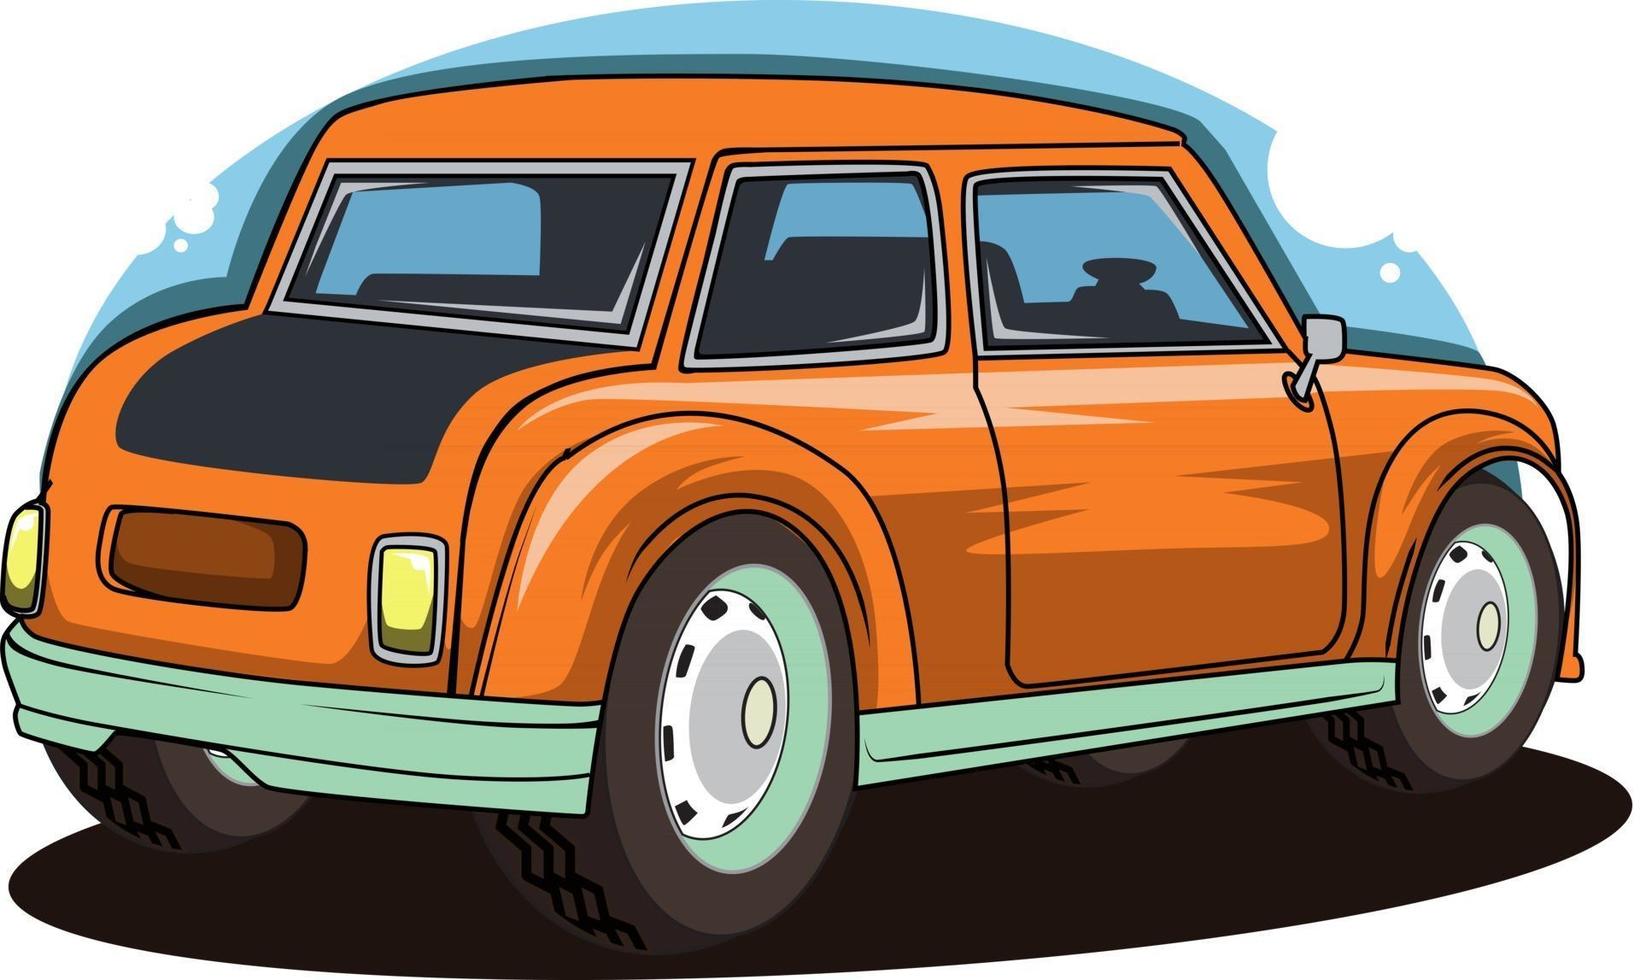 Amerikaanse klassieke auto illustratie vector